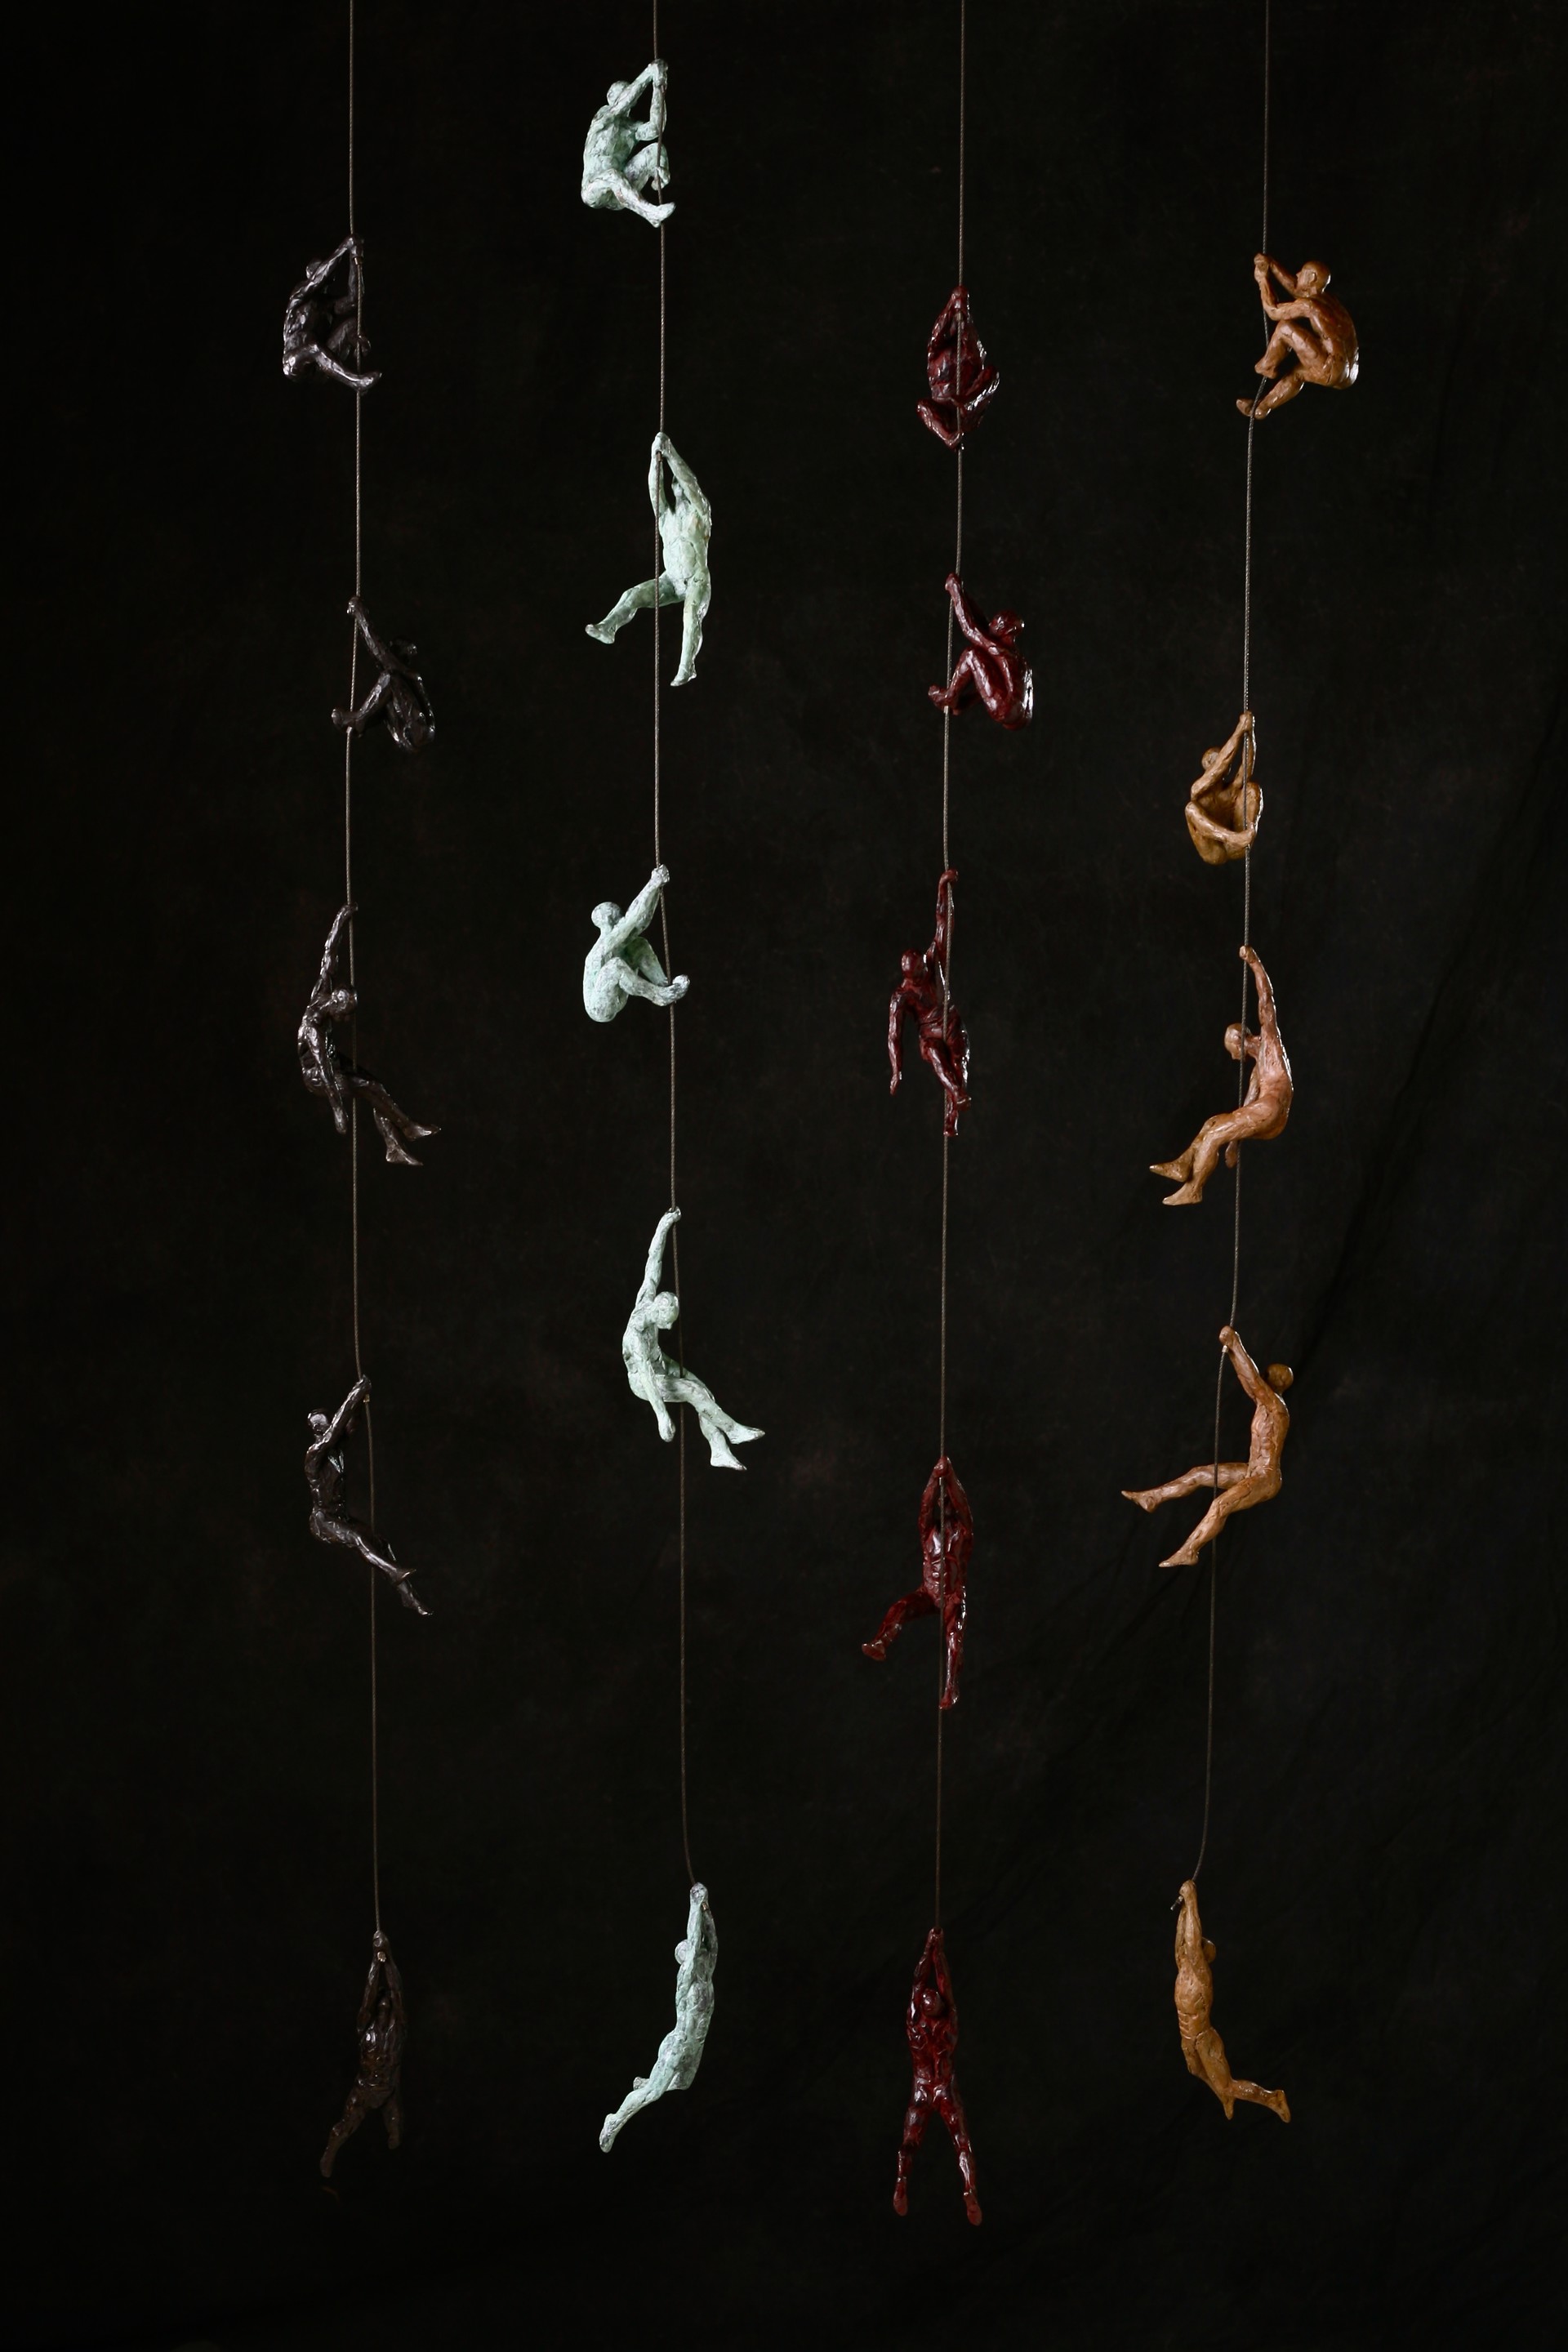 Rope Climbers by Bill Starke